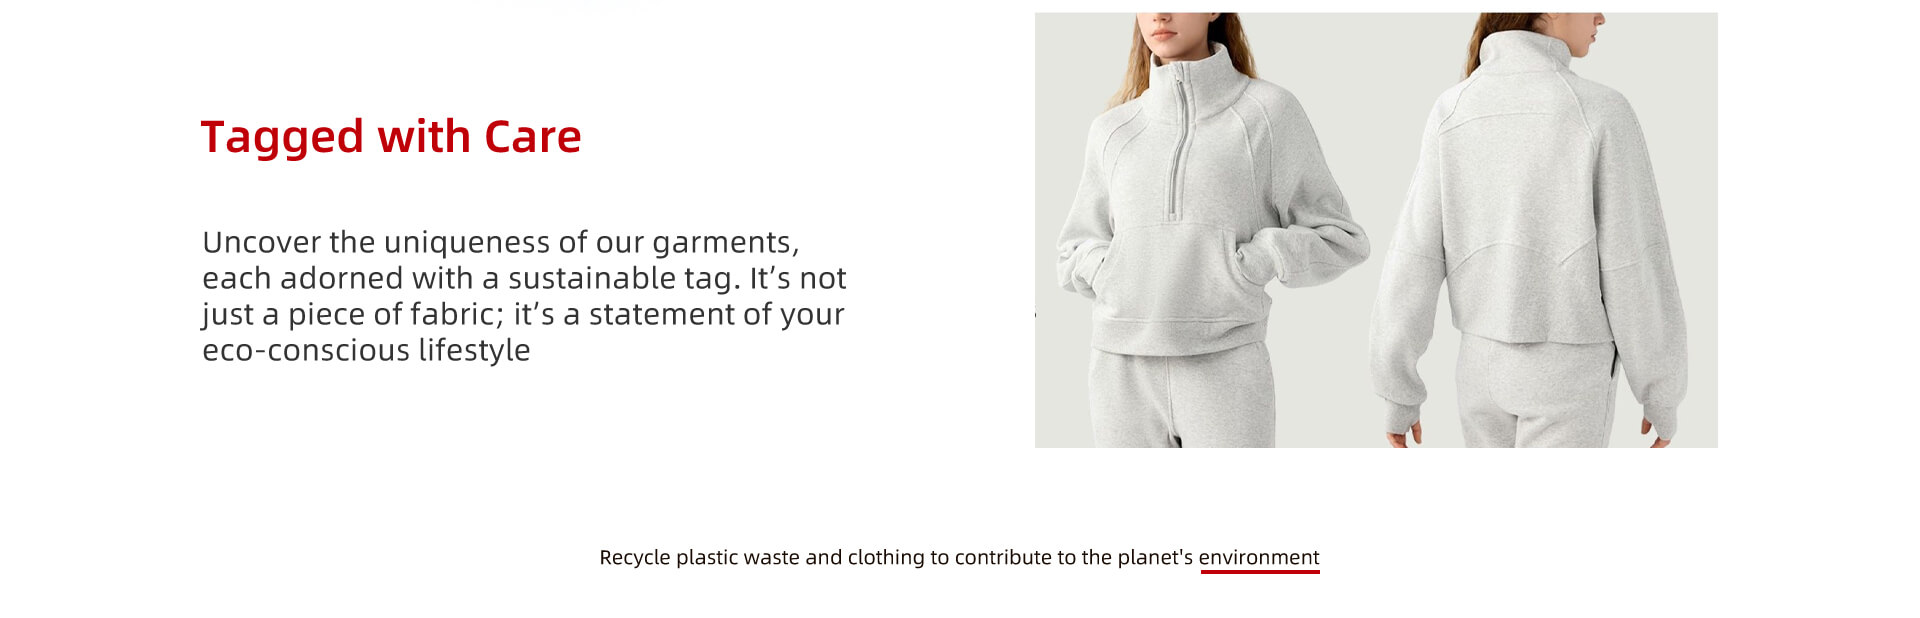 eco-friendly fabric